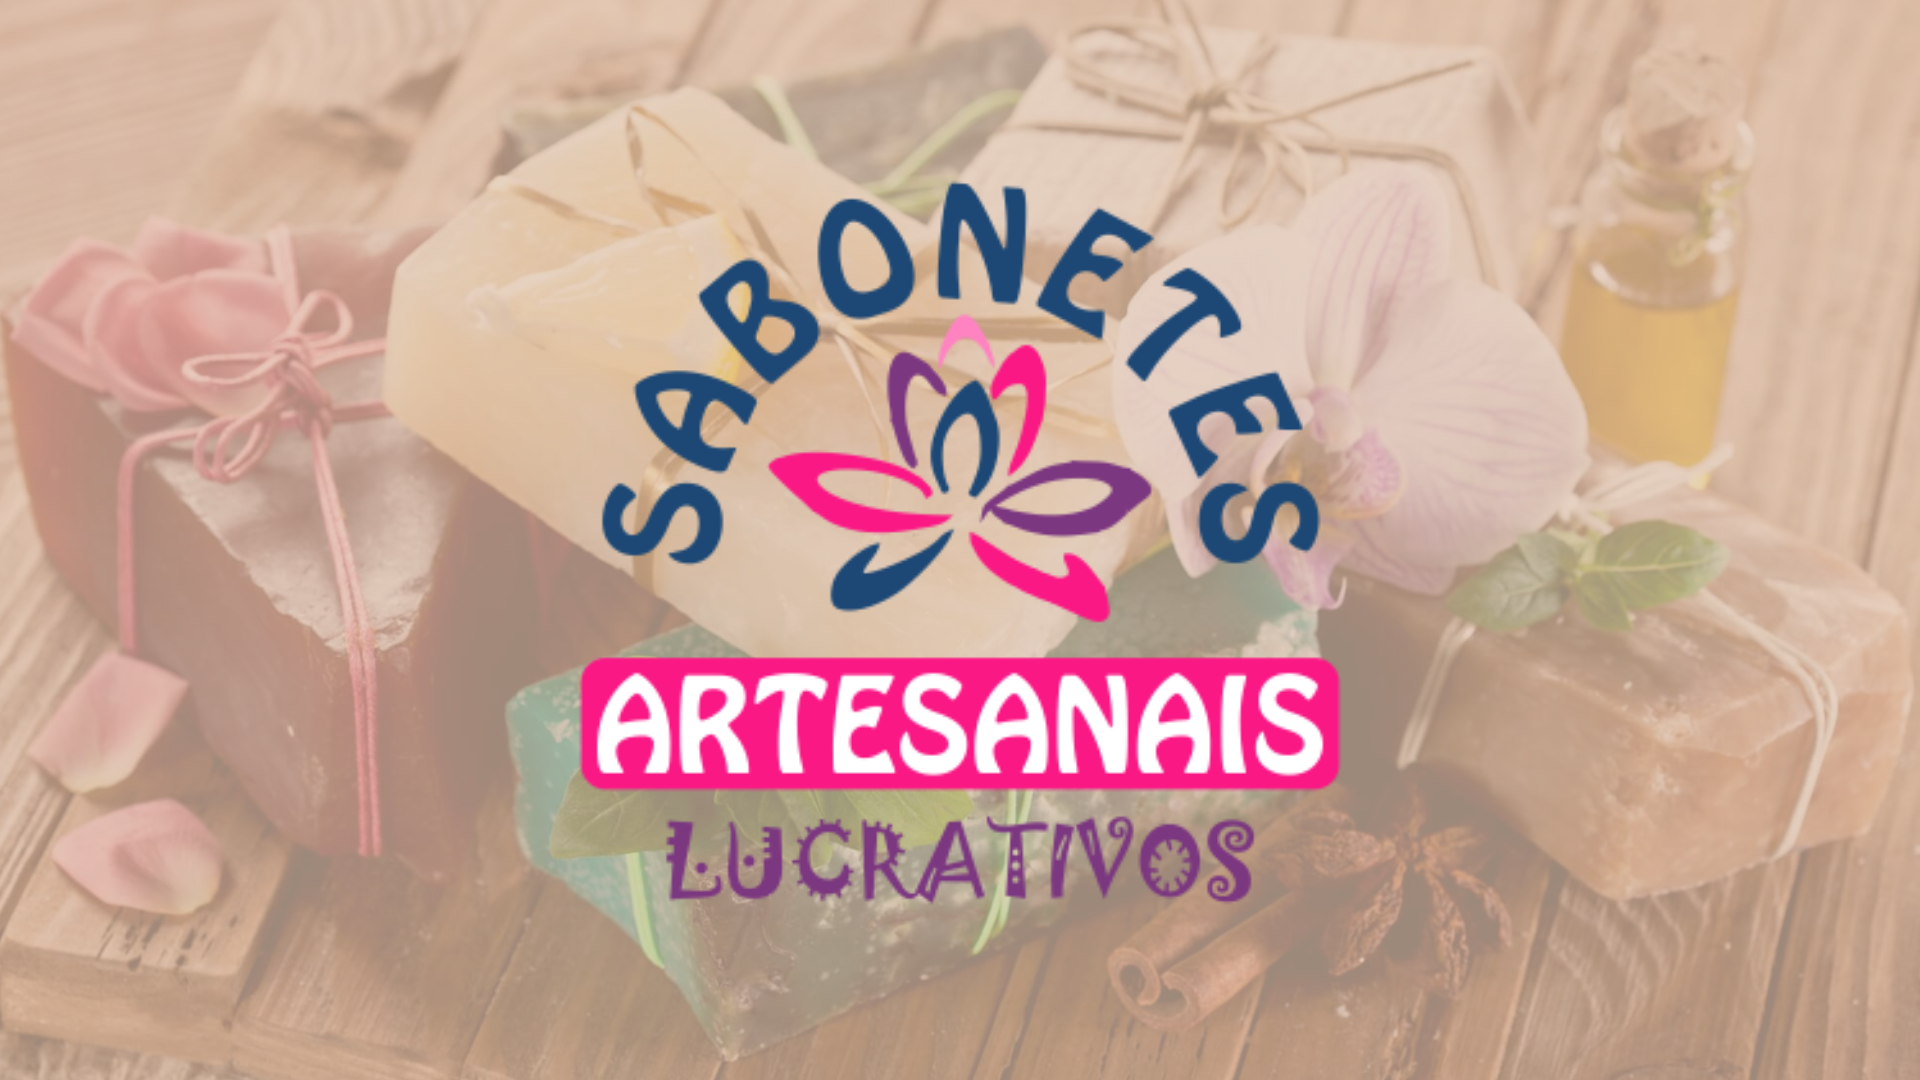 Sabonetes Artesanais Lucrativos